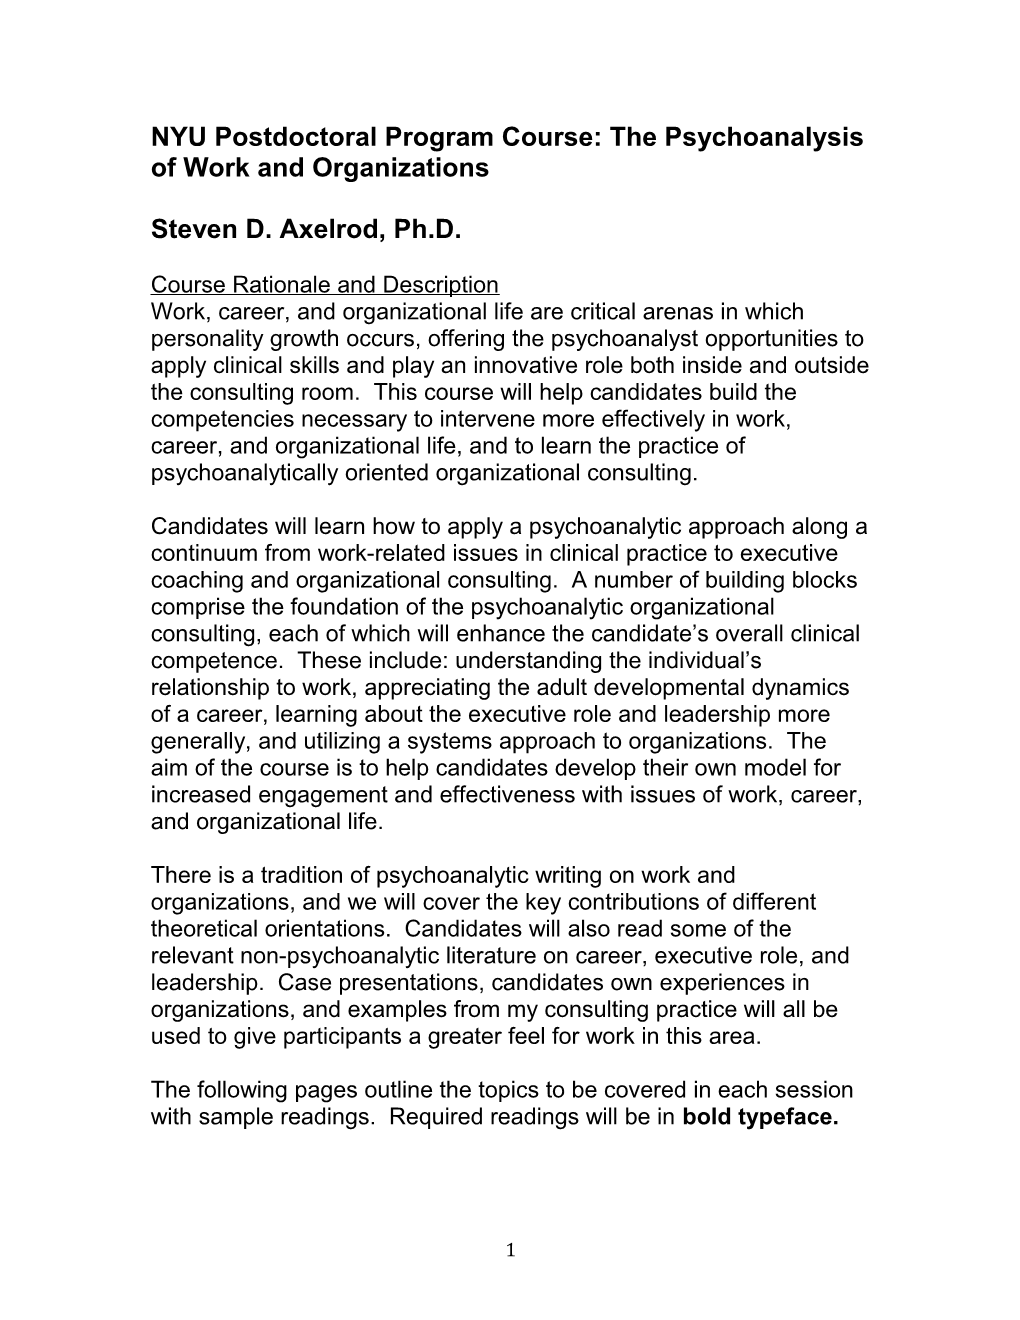 NYU Postdoctoral Program Course: the Psychoanalysis of Work and Organizations